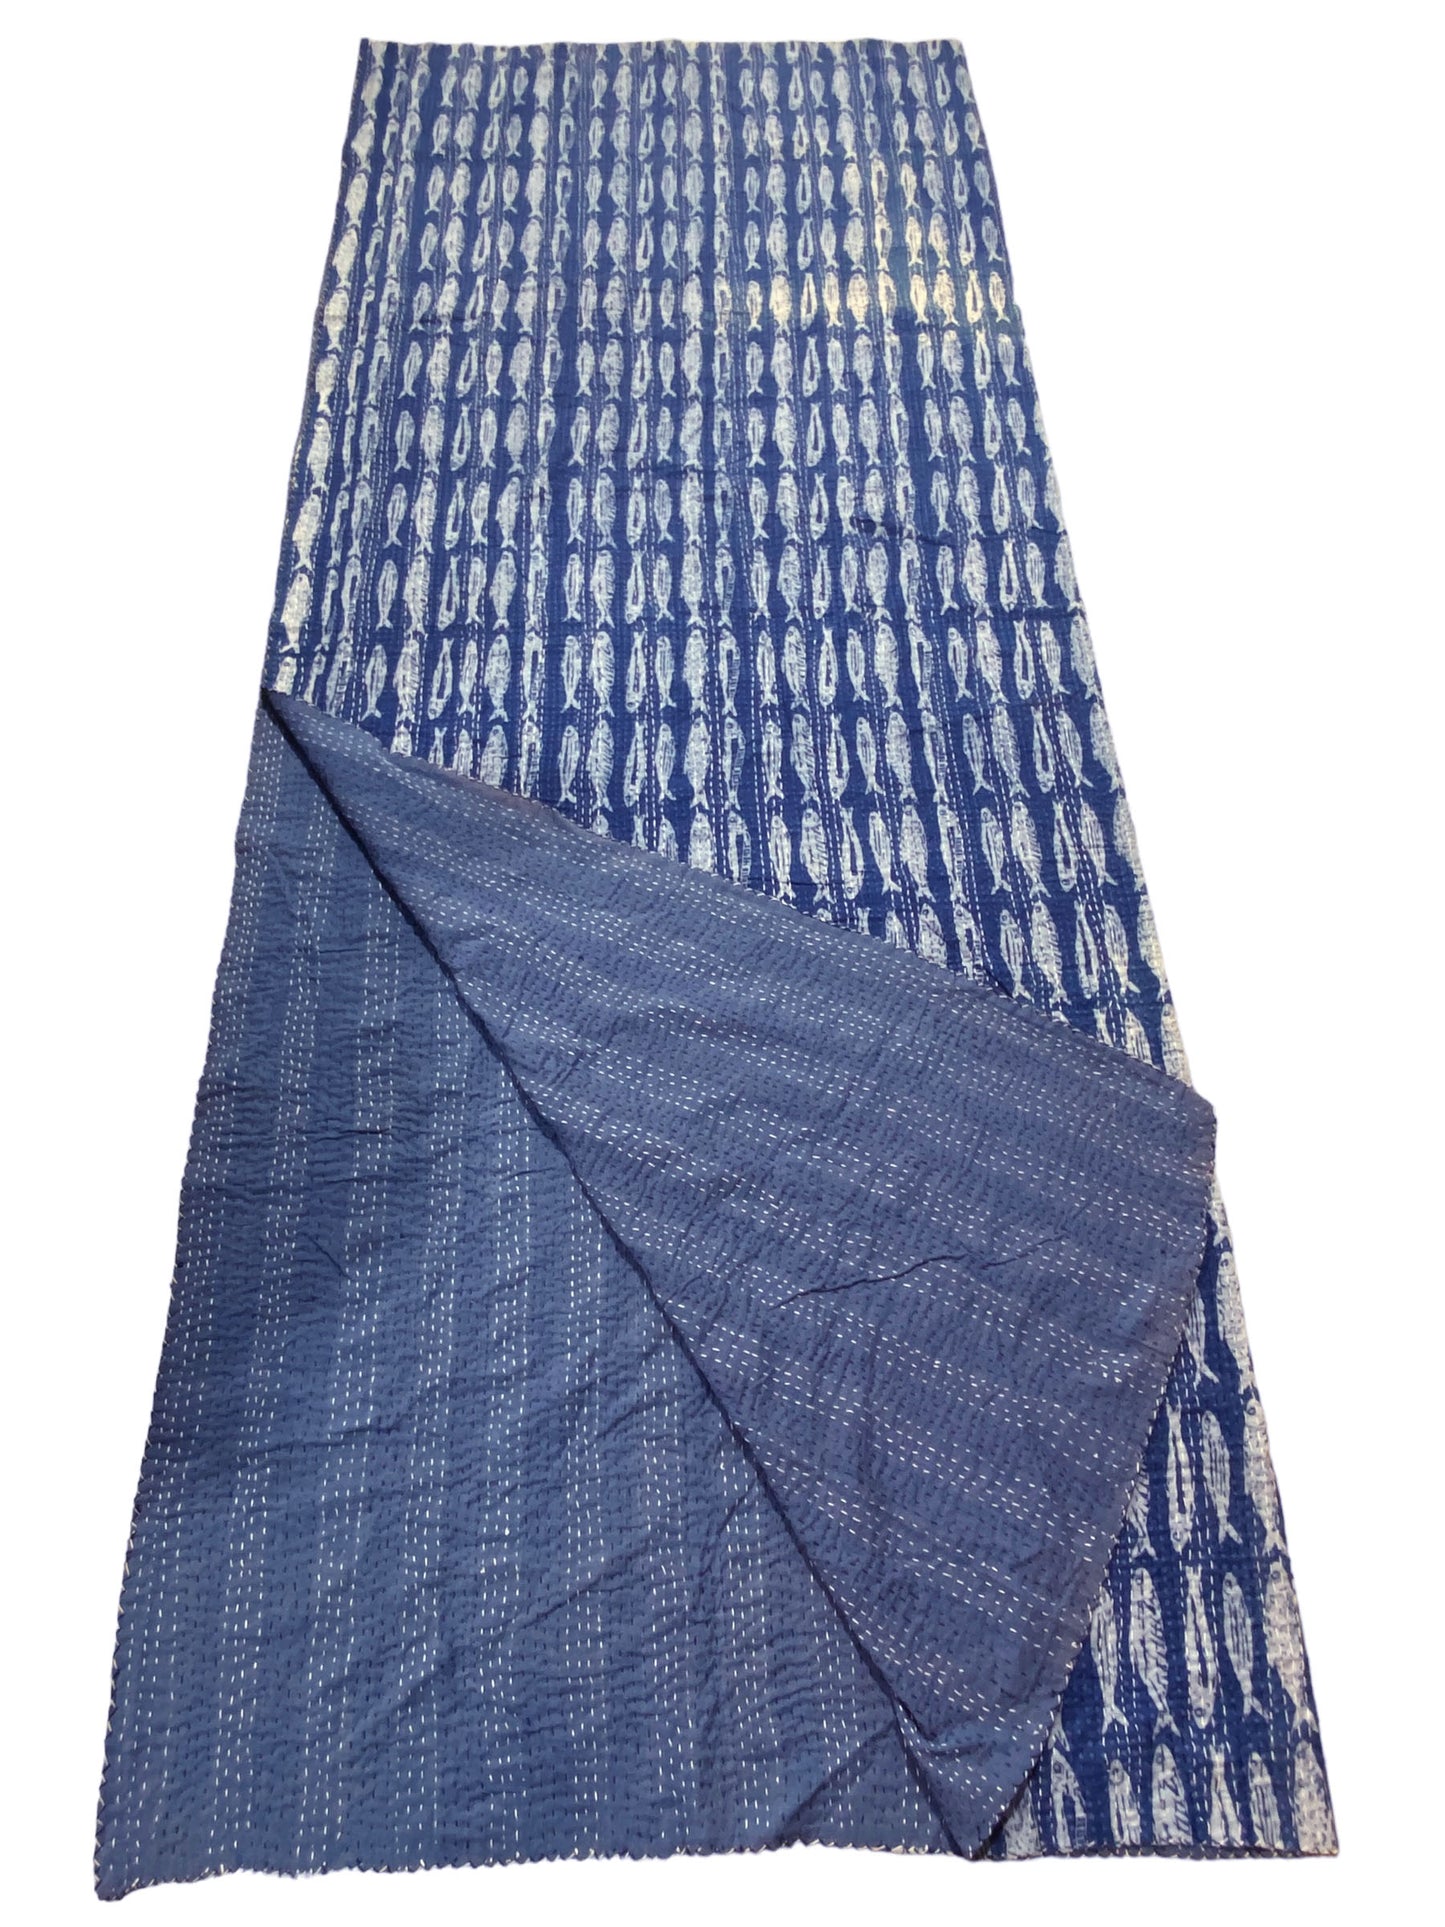 #5321 Large Indian Kantha Quilt Throw /Blanket /Quilt Bedspread 105"